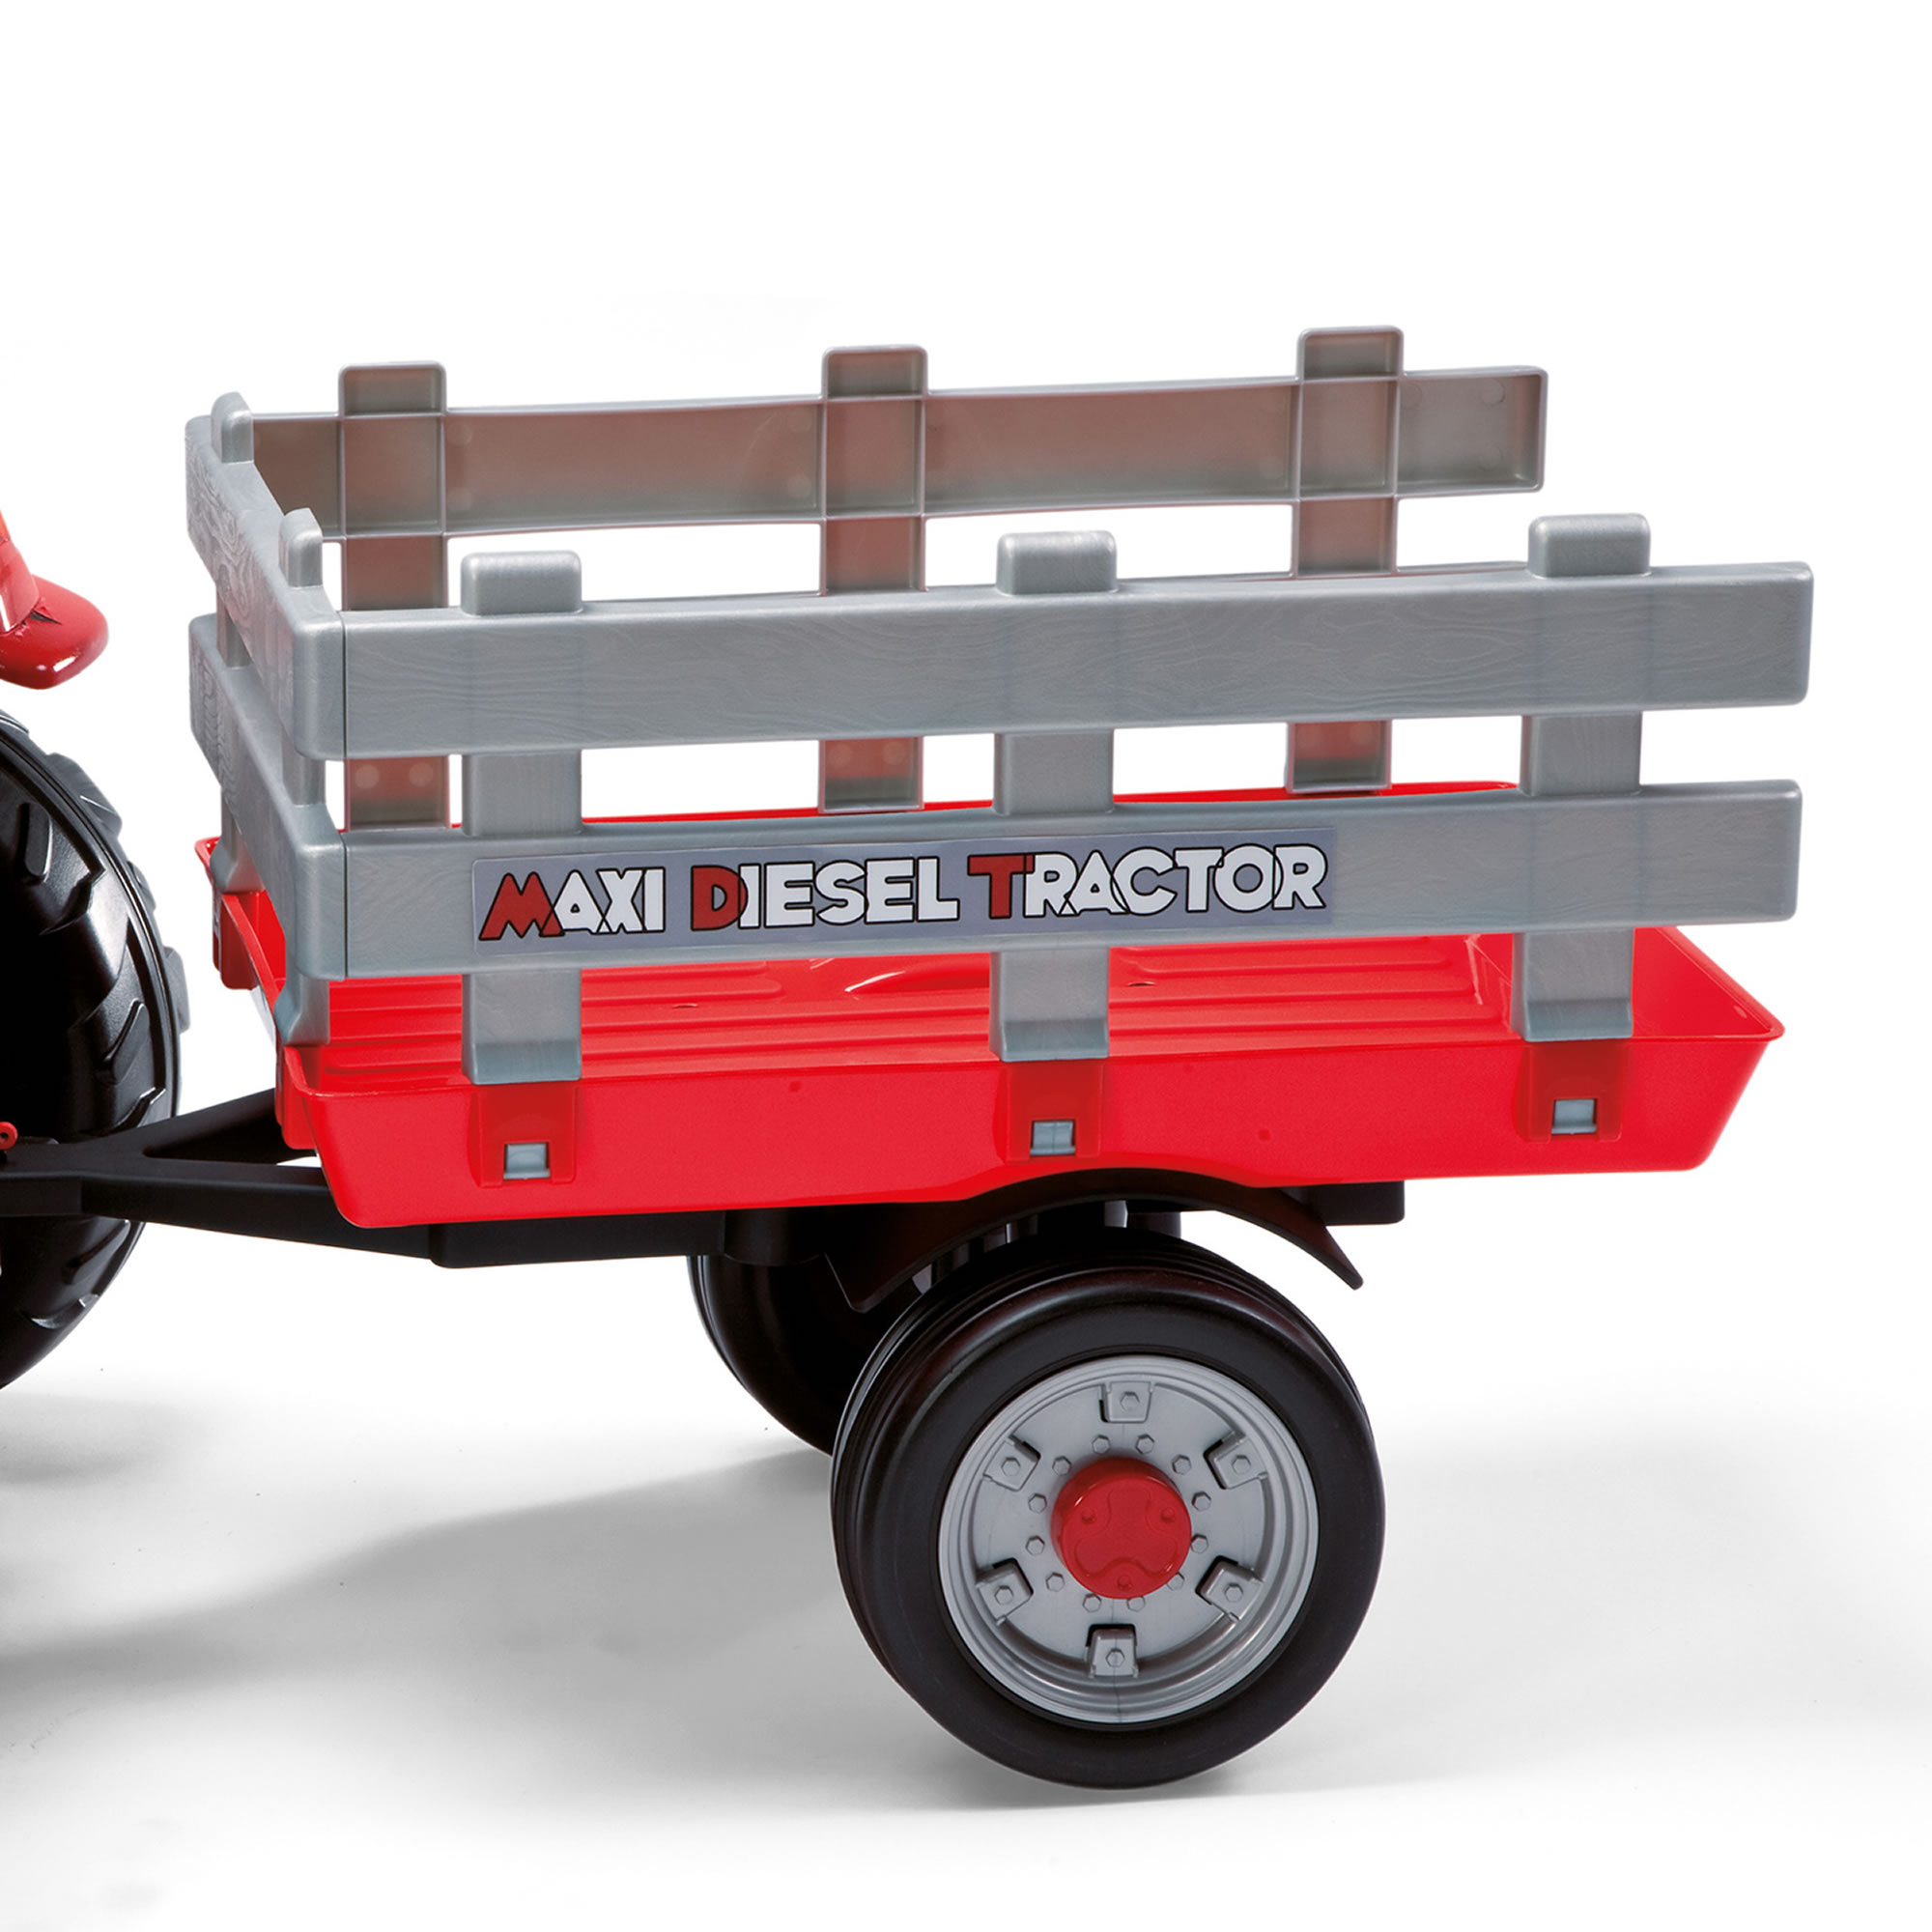 Peg perego maxi diesel tractor - peg perego - Peg Perego